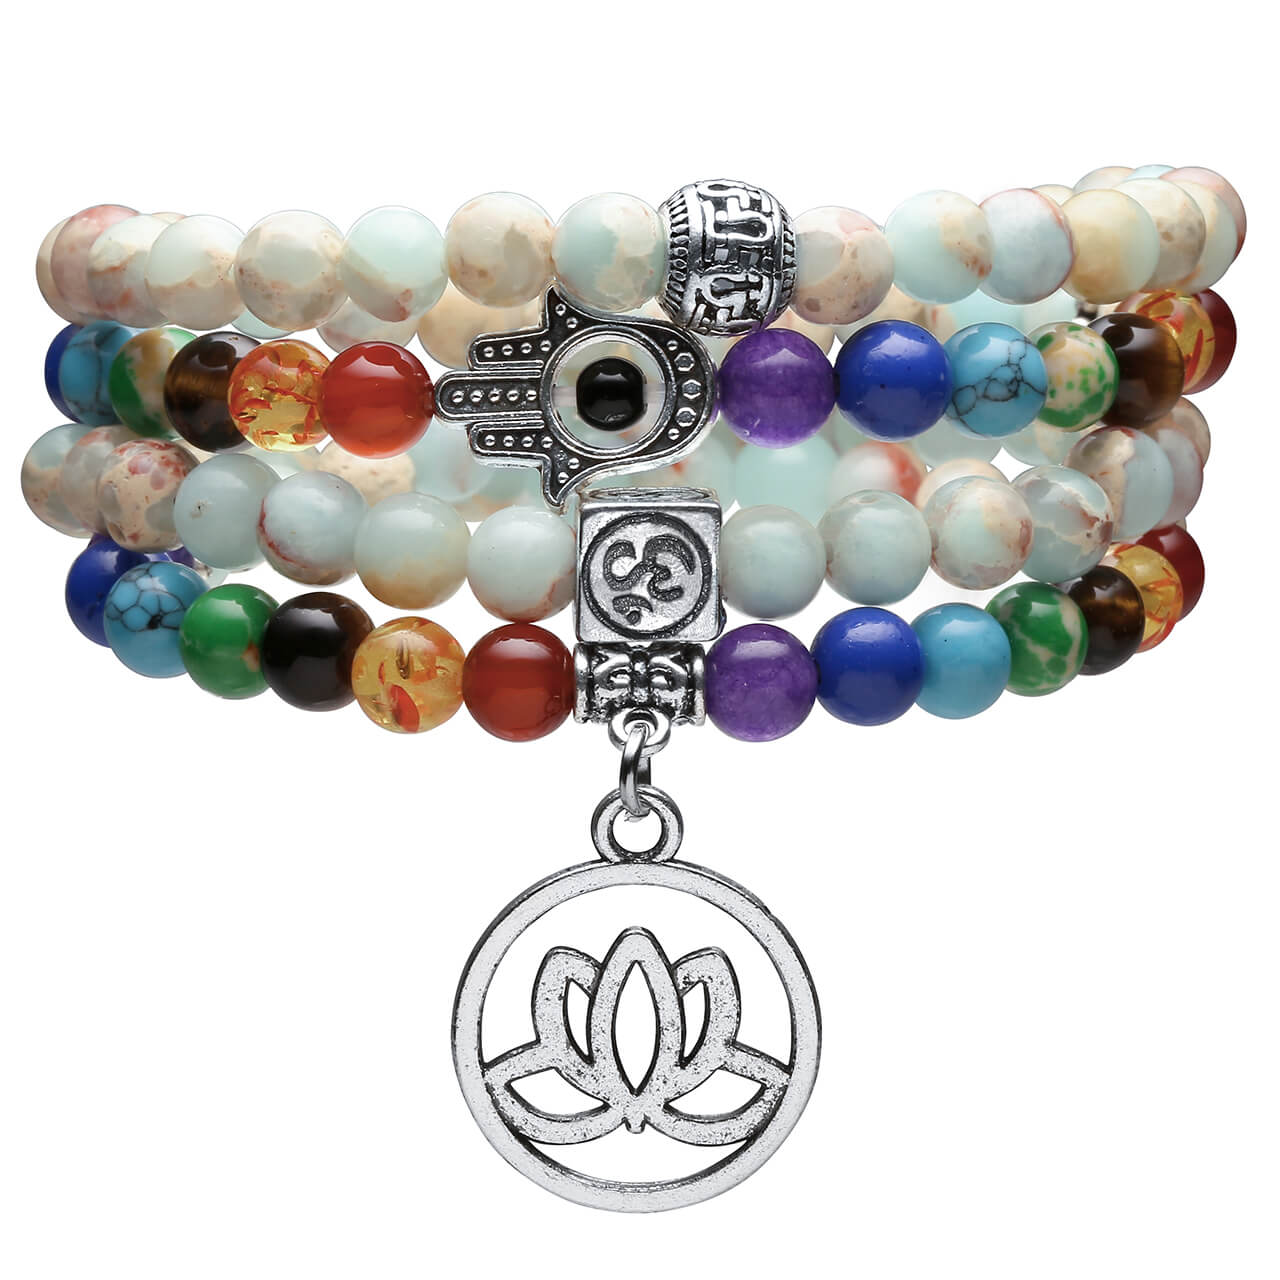 Jovivi 108 Buddhist Prayer Beads 7 Chakra Tibetan Mala Bracelet with lotus charm 